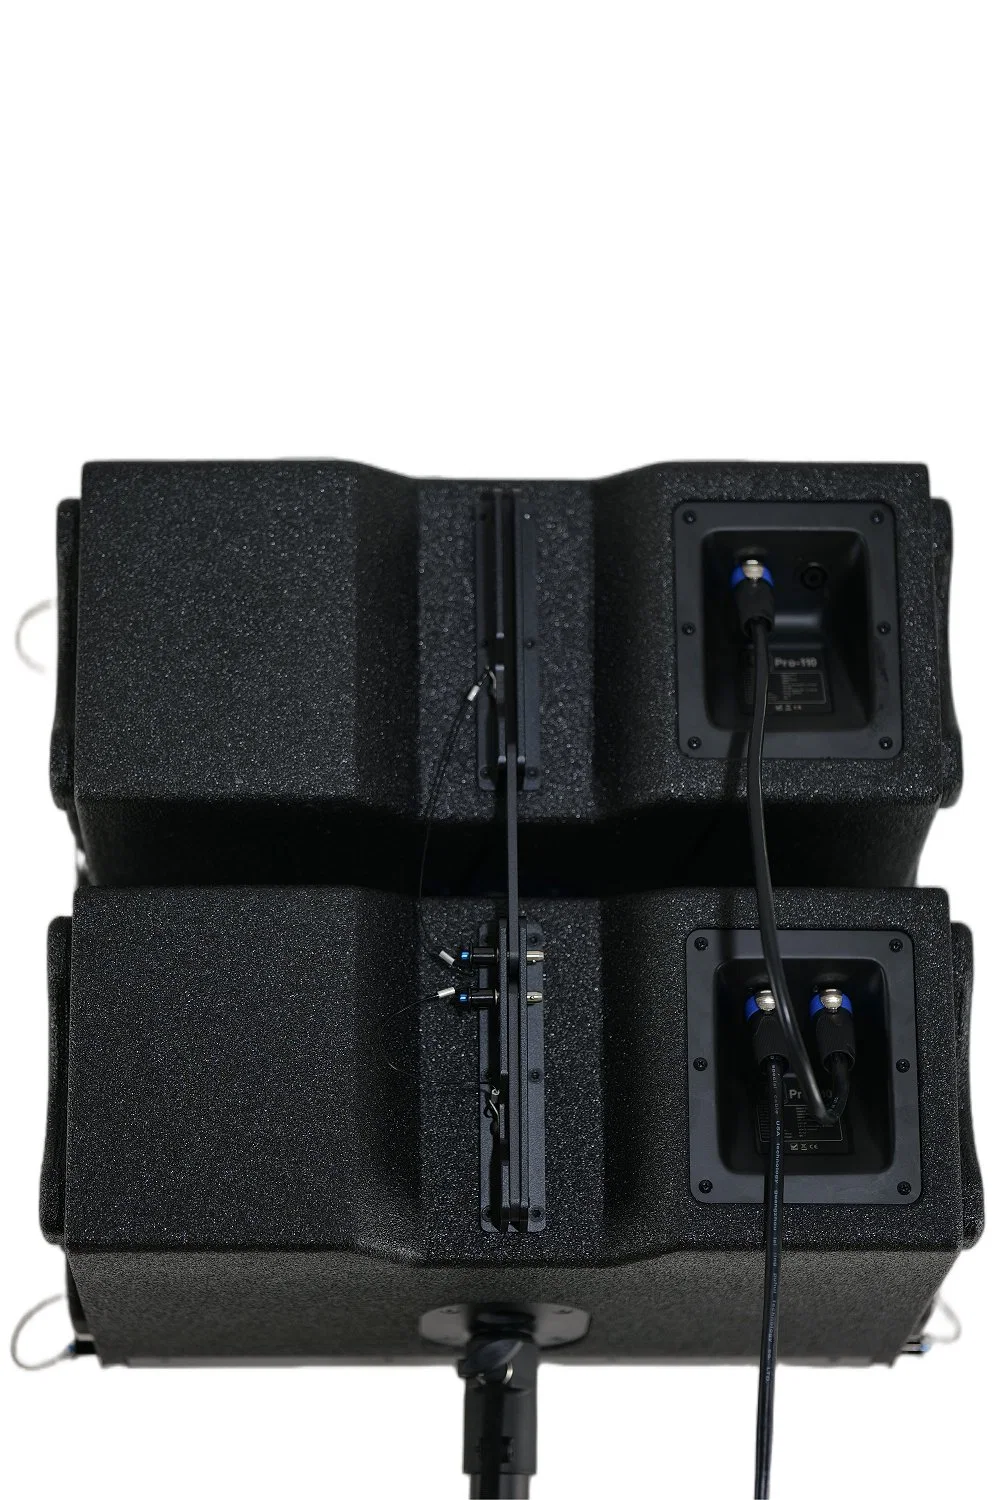 10 Zoll Professional Line Array Lautsprecher T. I pro Audio Wasserdichtes Mini-Soundsystem